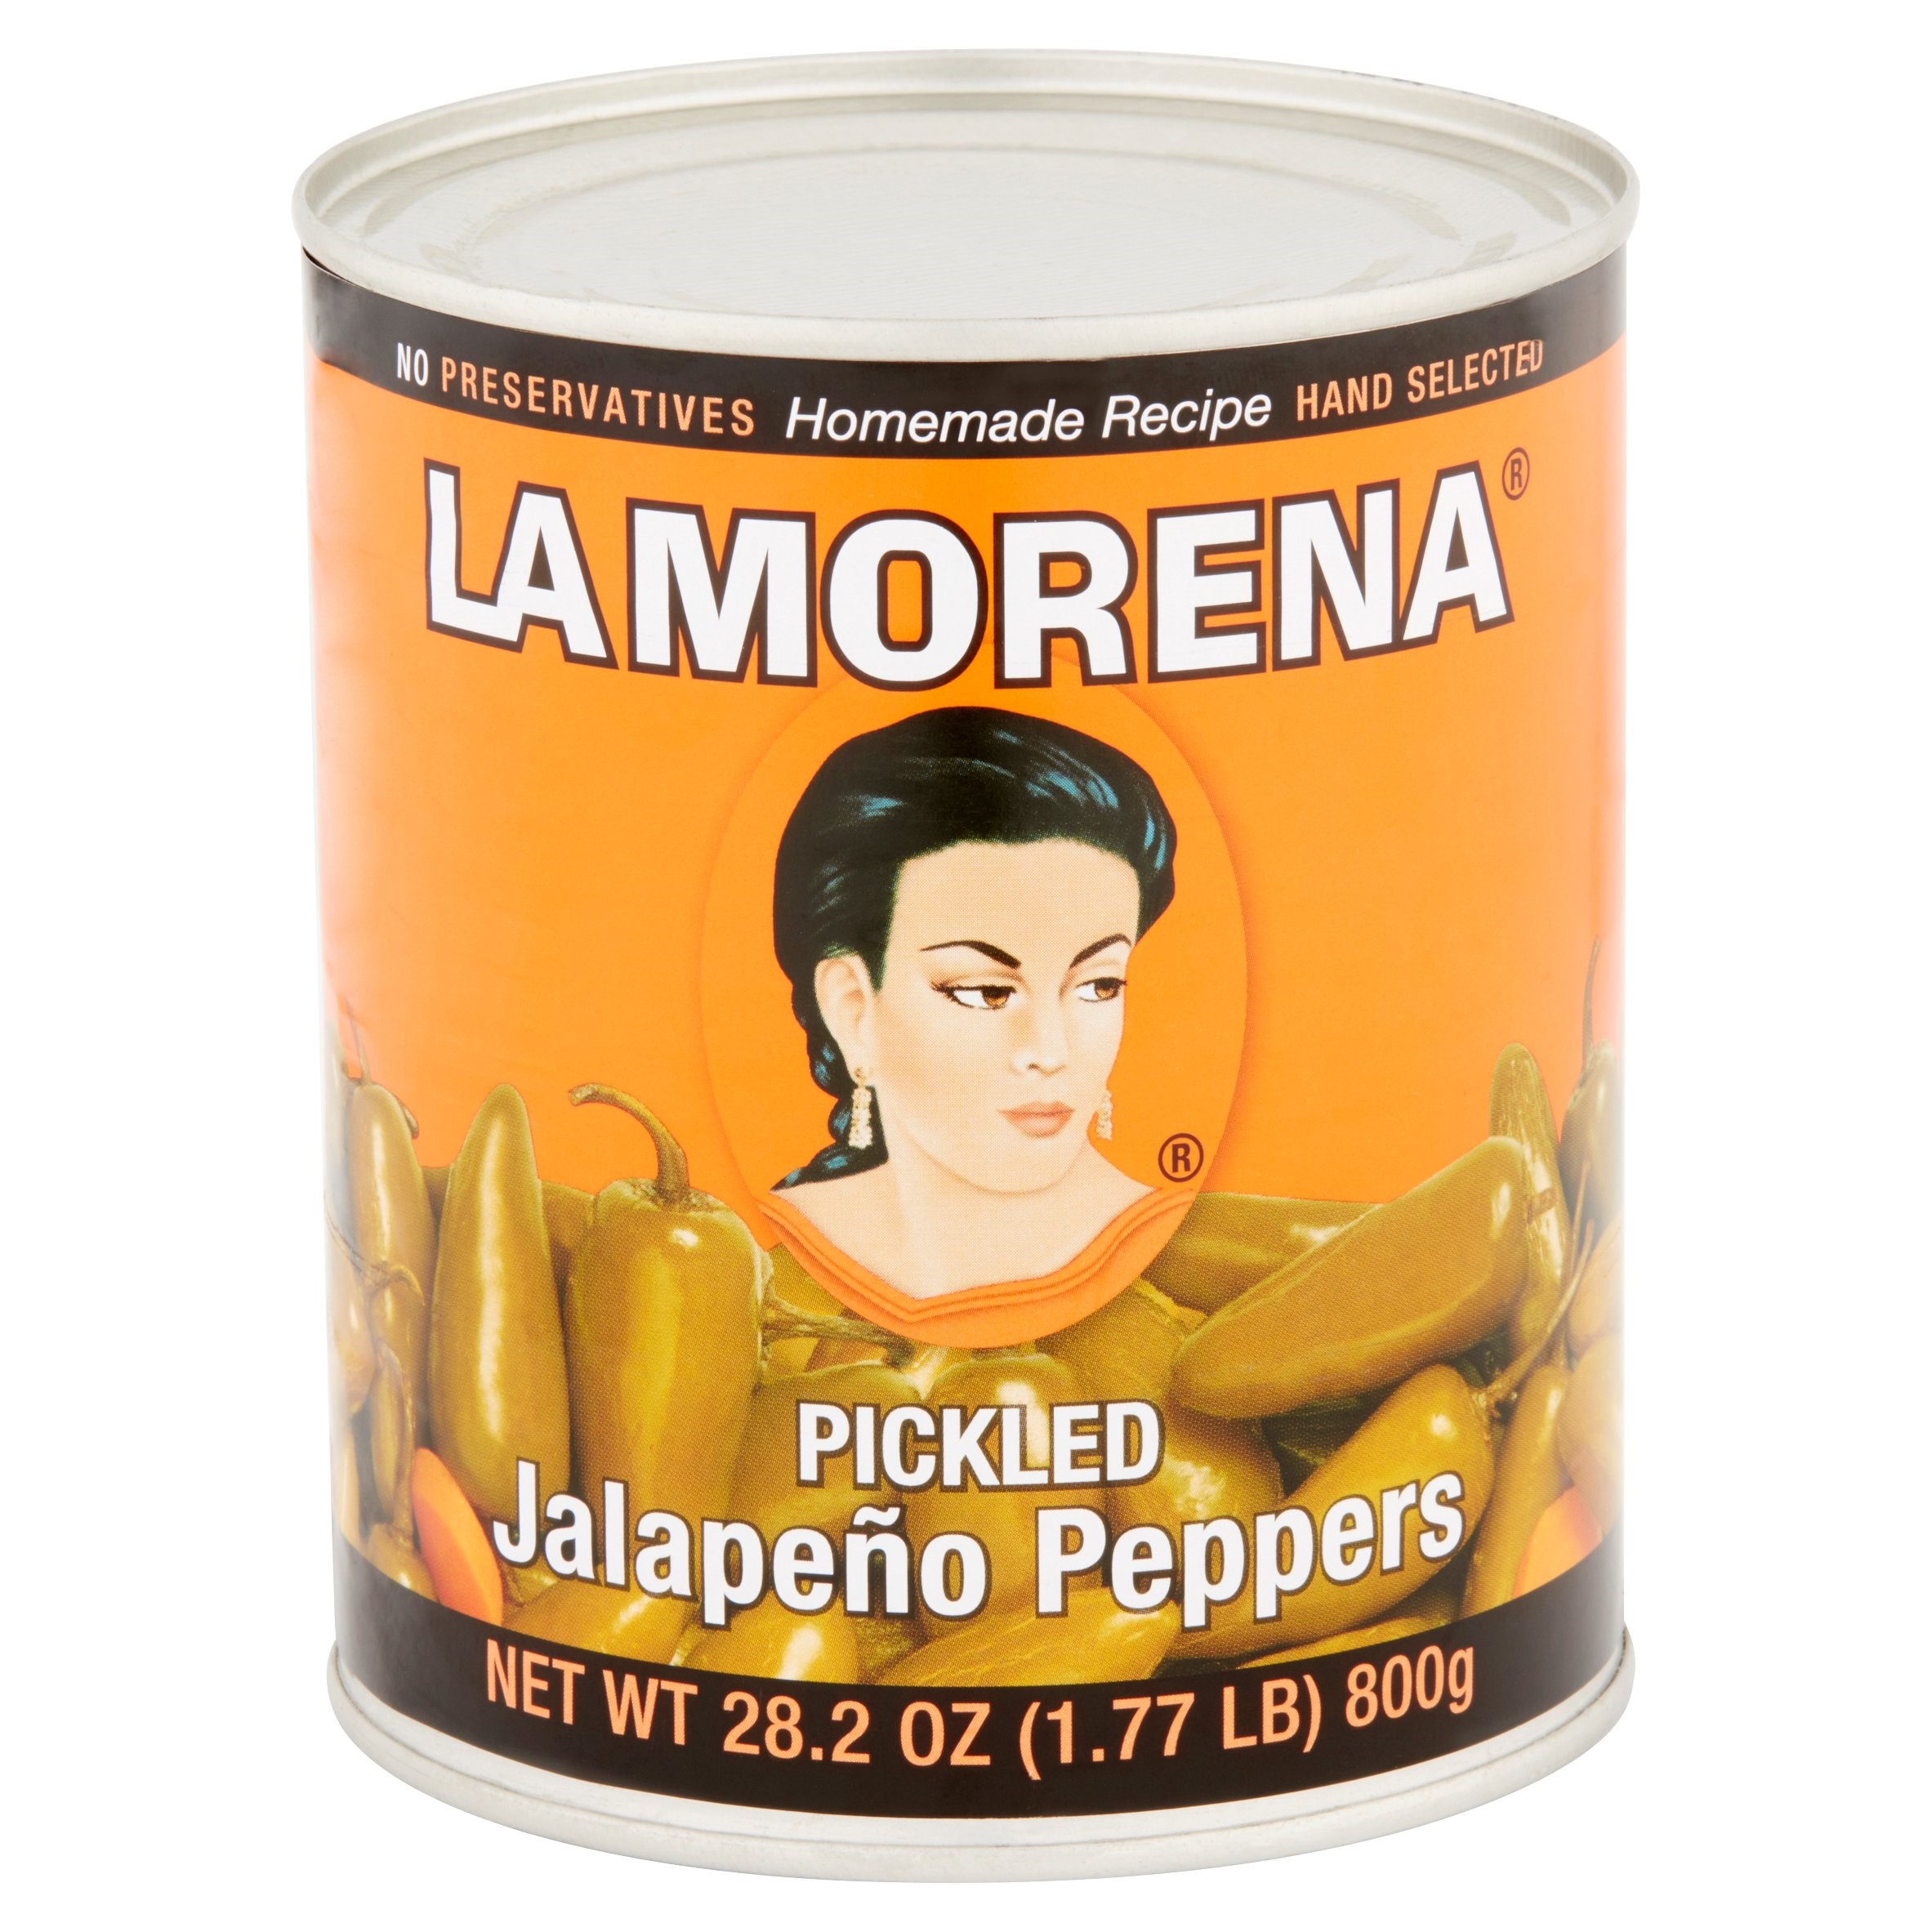 Lamorena Pickled Jalapeno Peppers, 28.2 oz - image 2 of 2